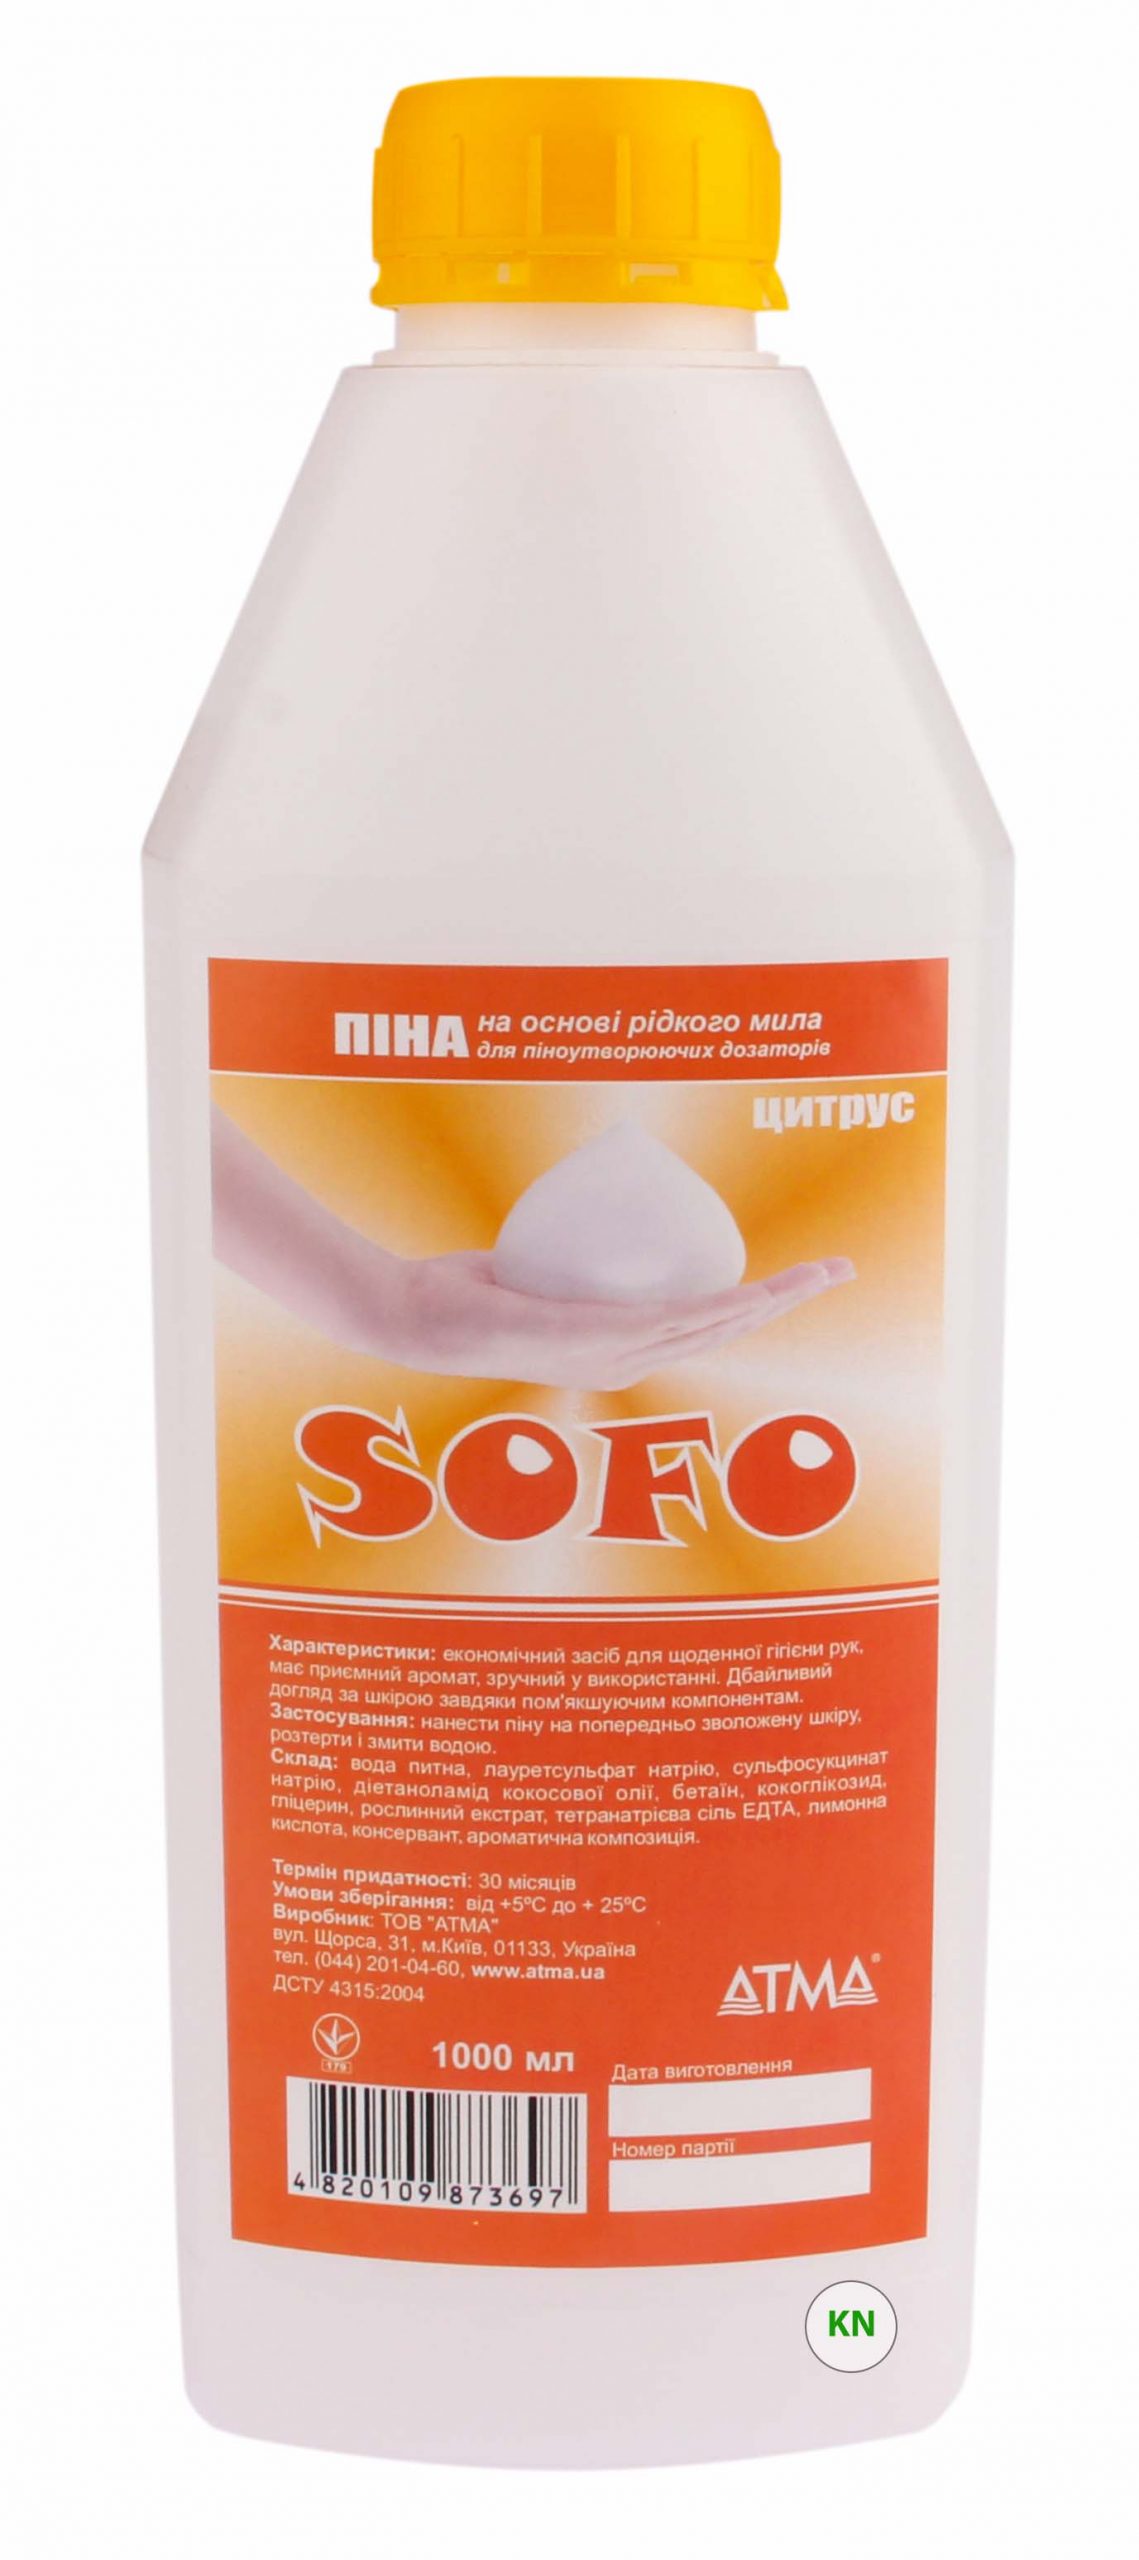 Мыло-пена "Sofo", 1000 мл